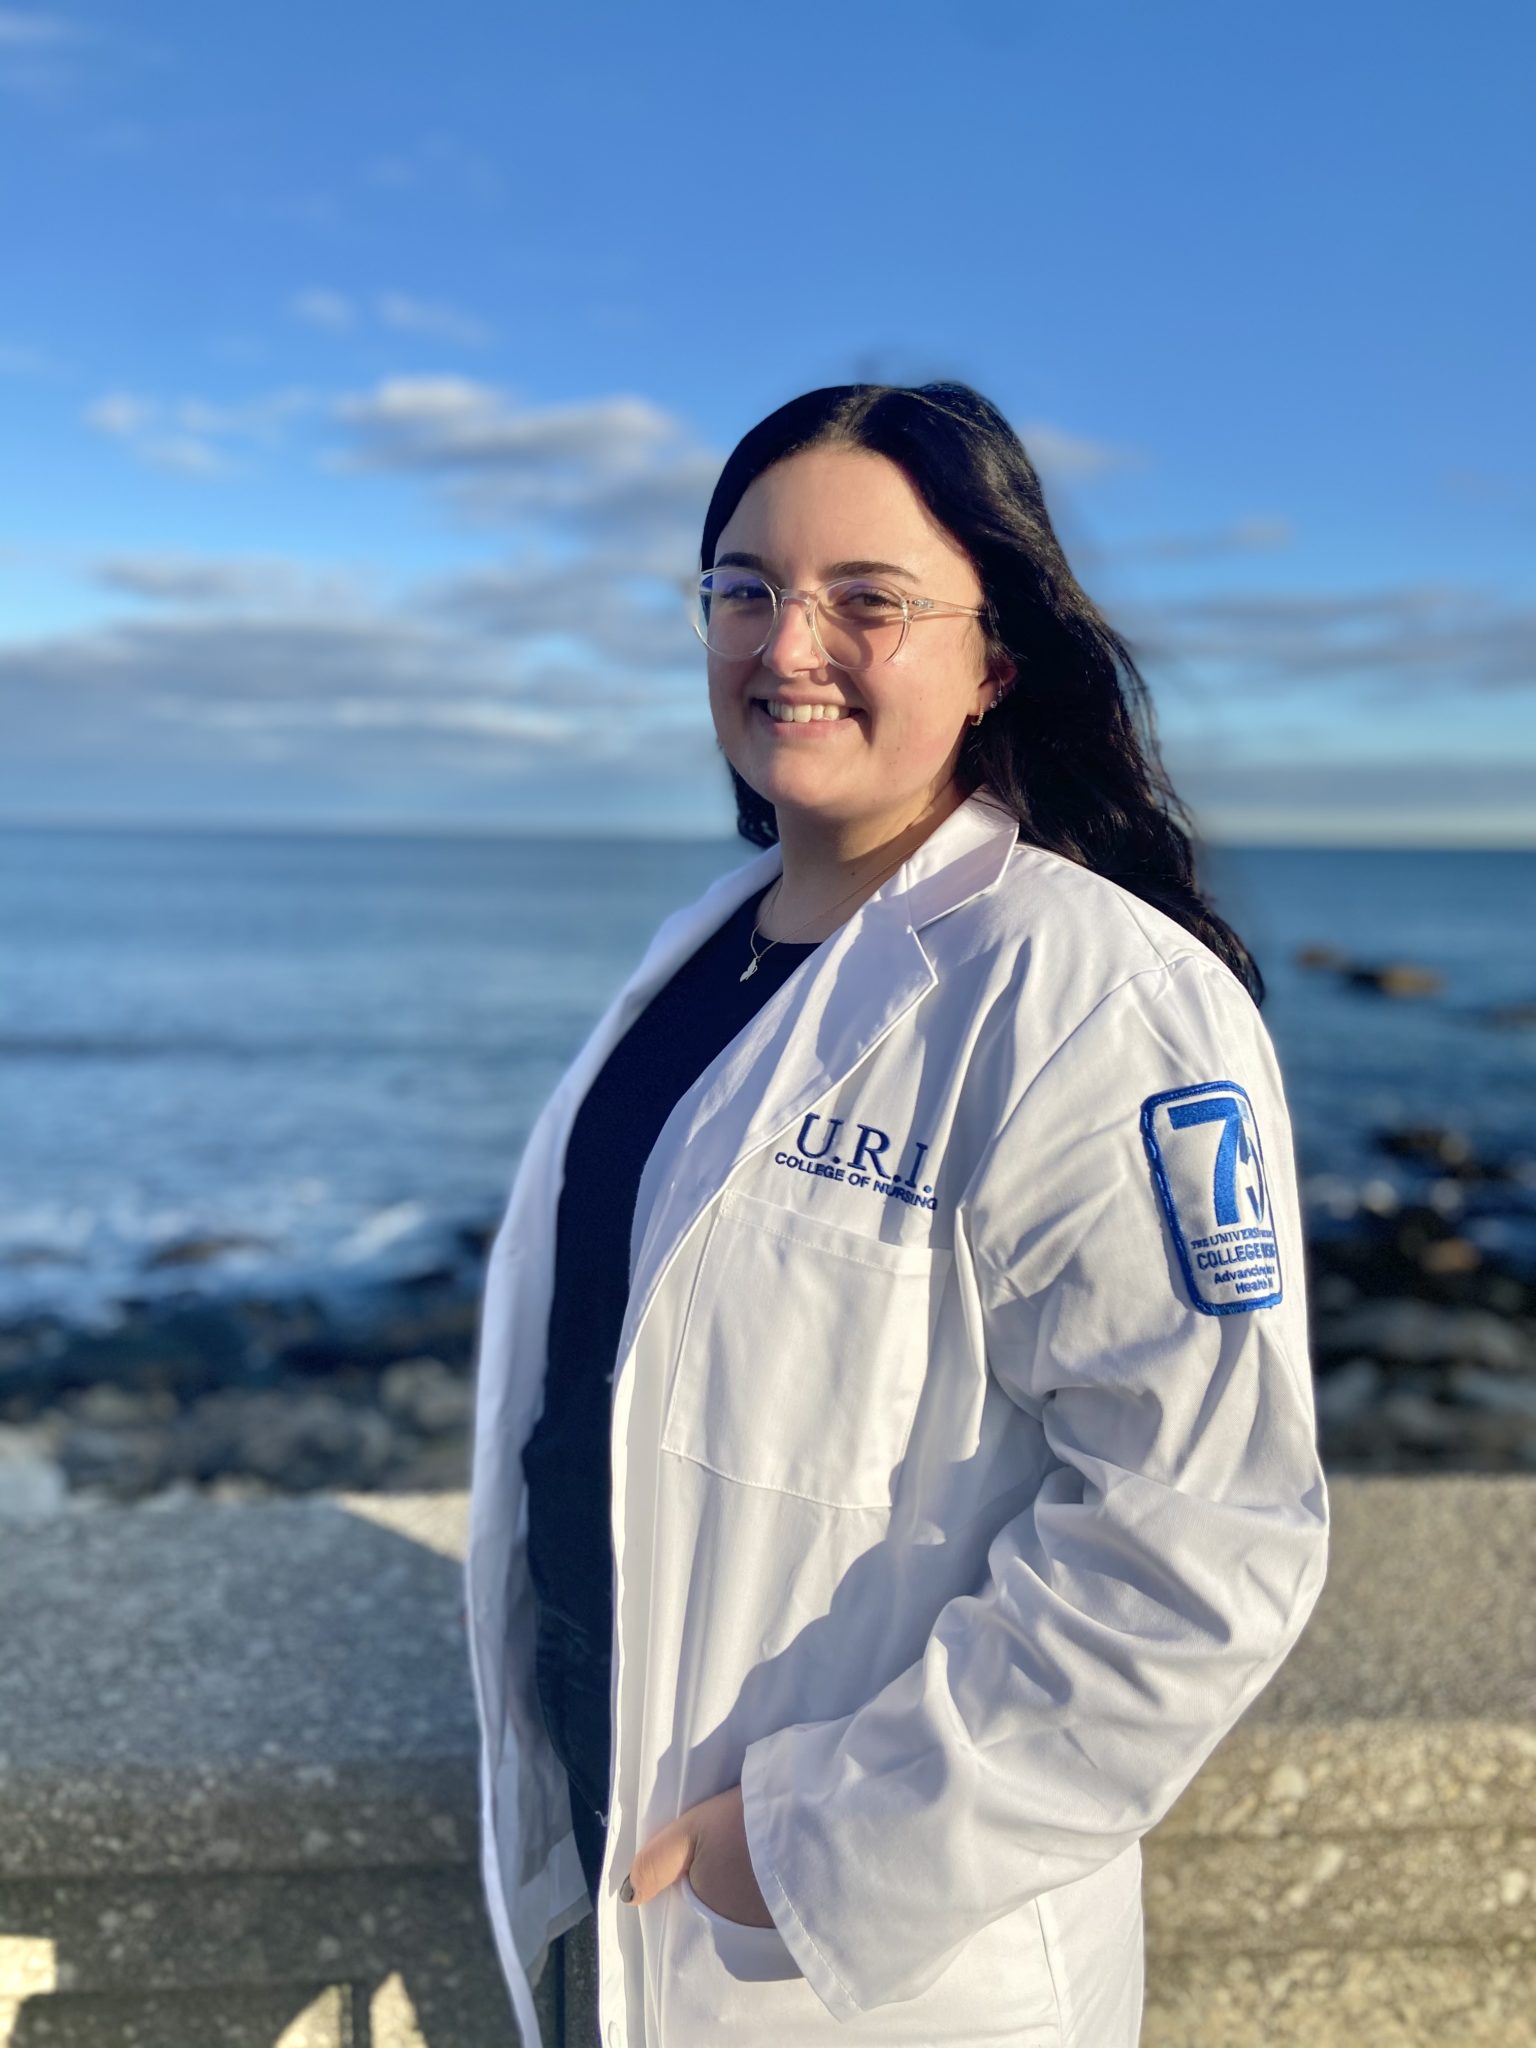 student nurse in scrubs jacket standing in front of an ocean view